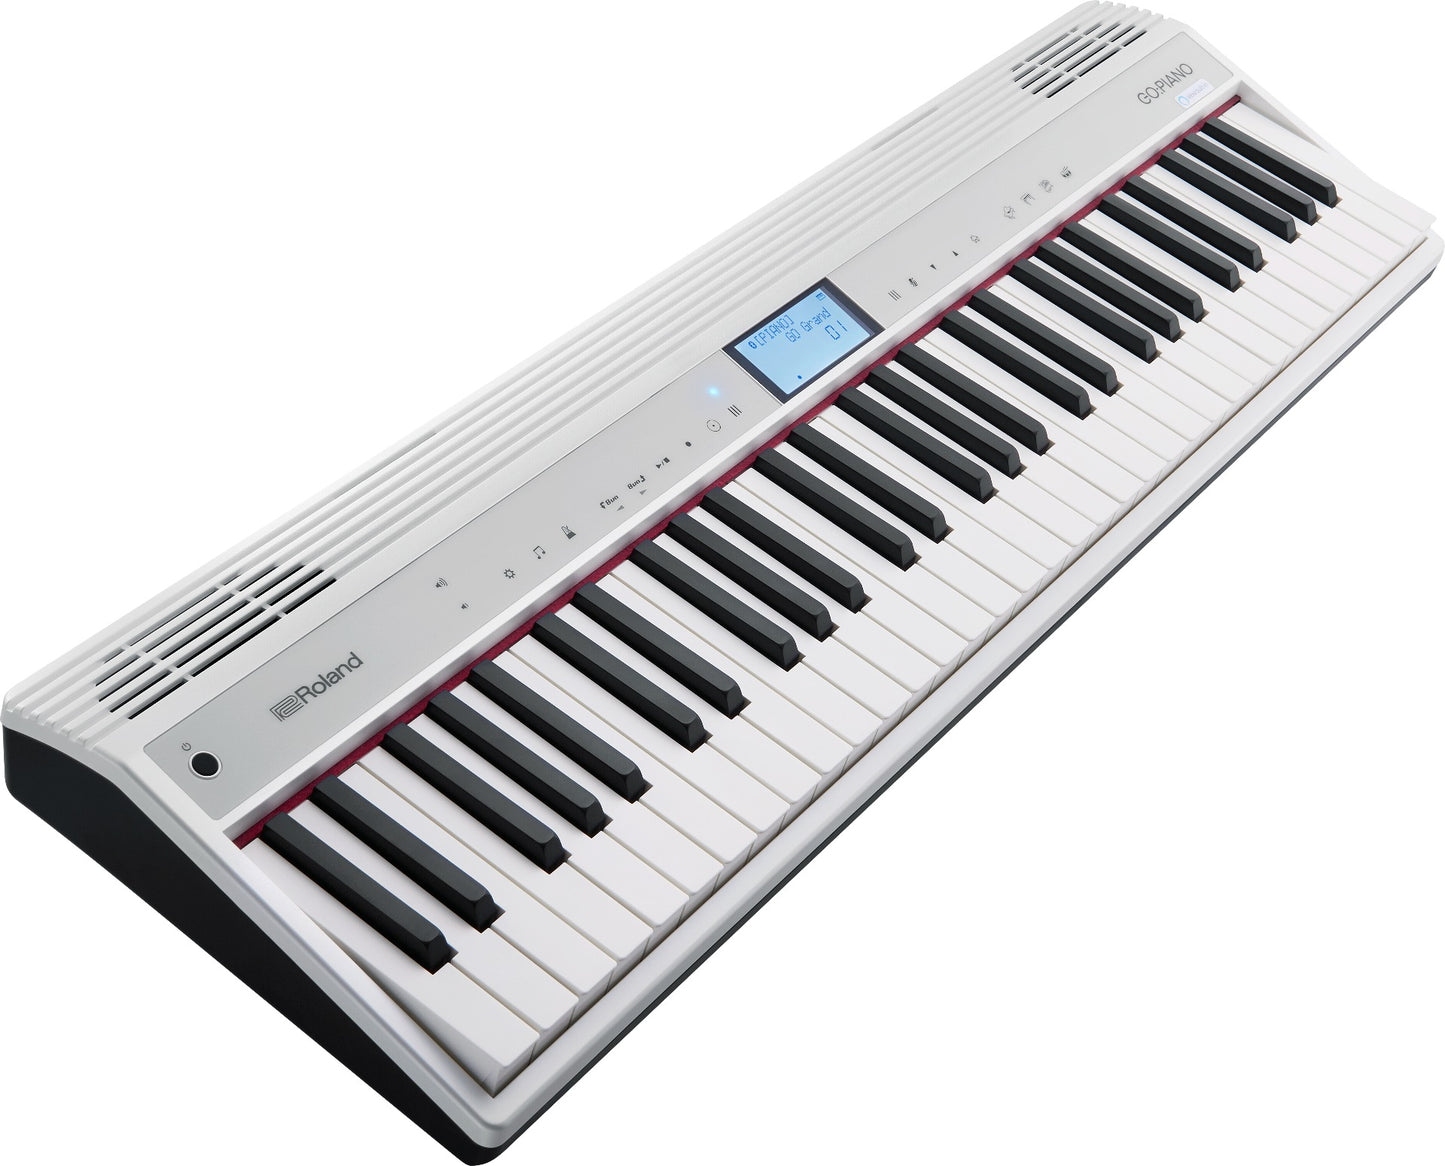 Roland Go:Piano GO-61P-A Digital Piano w/ Alexa Built In